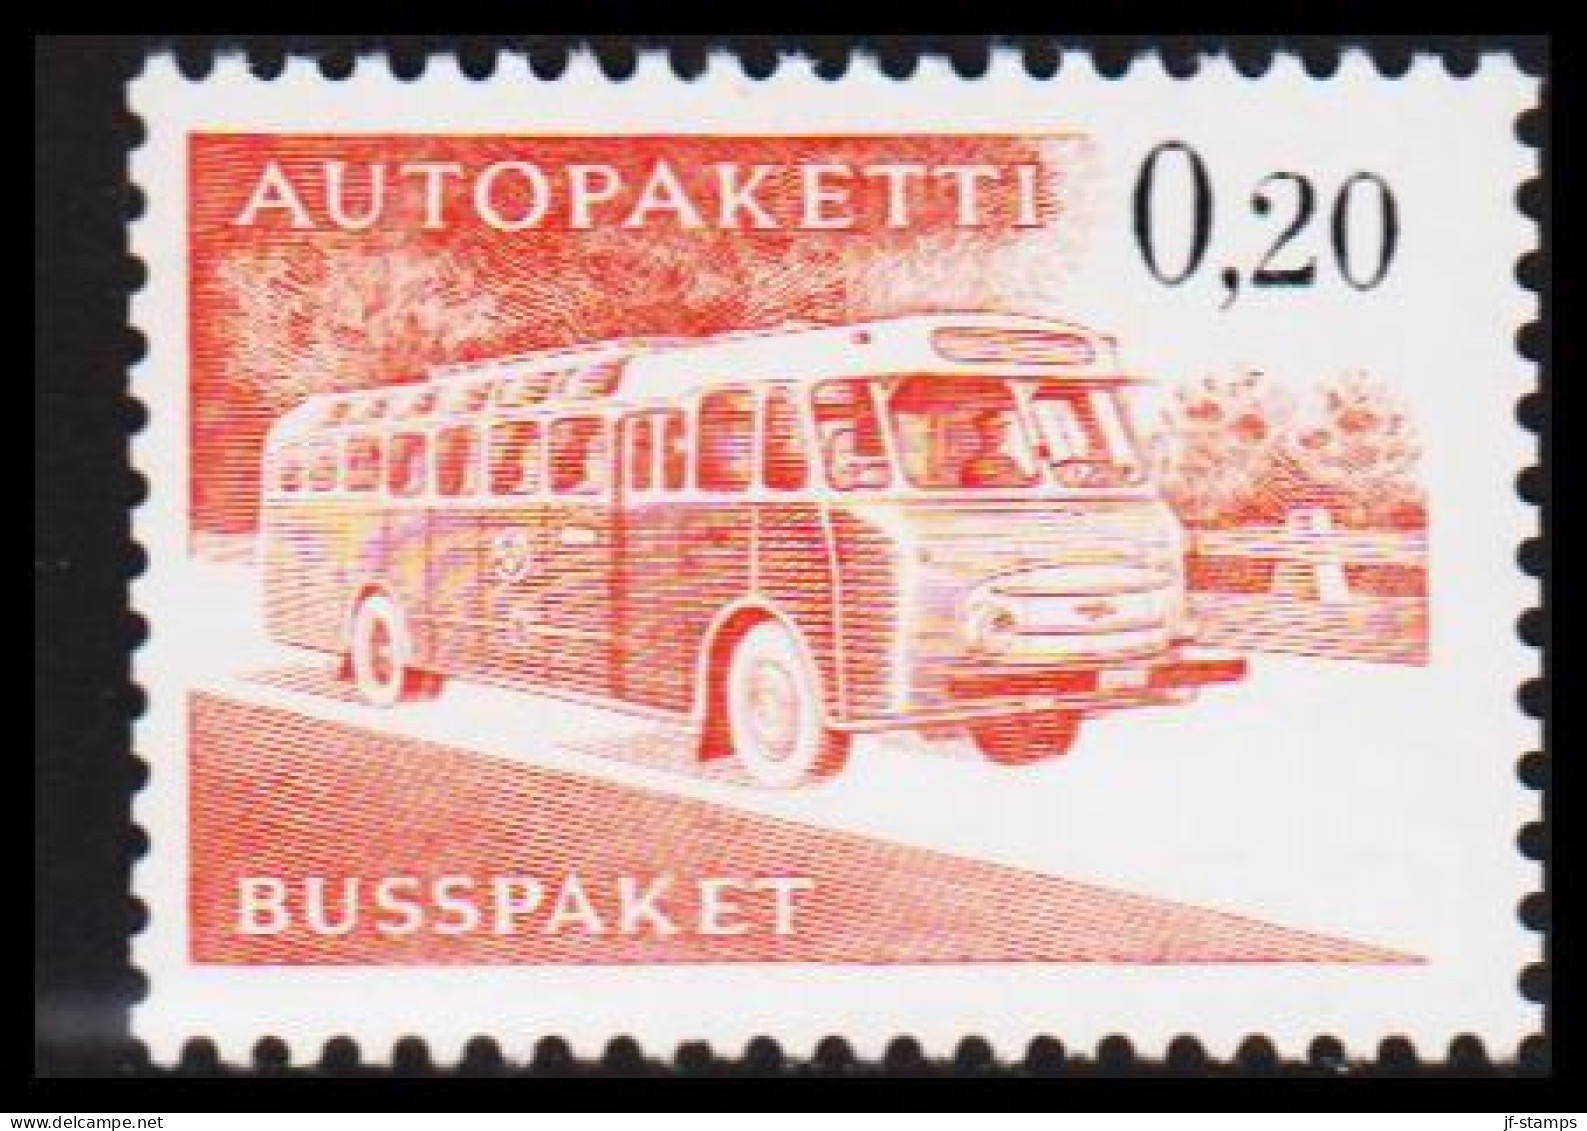 1963-1980. FINLAND. Mail Bus. 0,20 Mk. AUTOPAKETTI - BUSSPAKET Never Hinged. Lumogen. Yell... (Michel AP 11y) - JF535628 - Postbuspakete